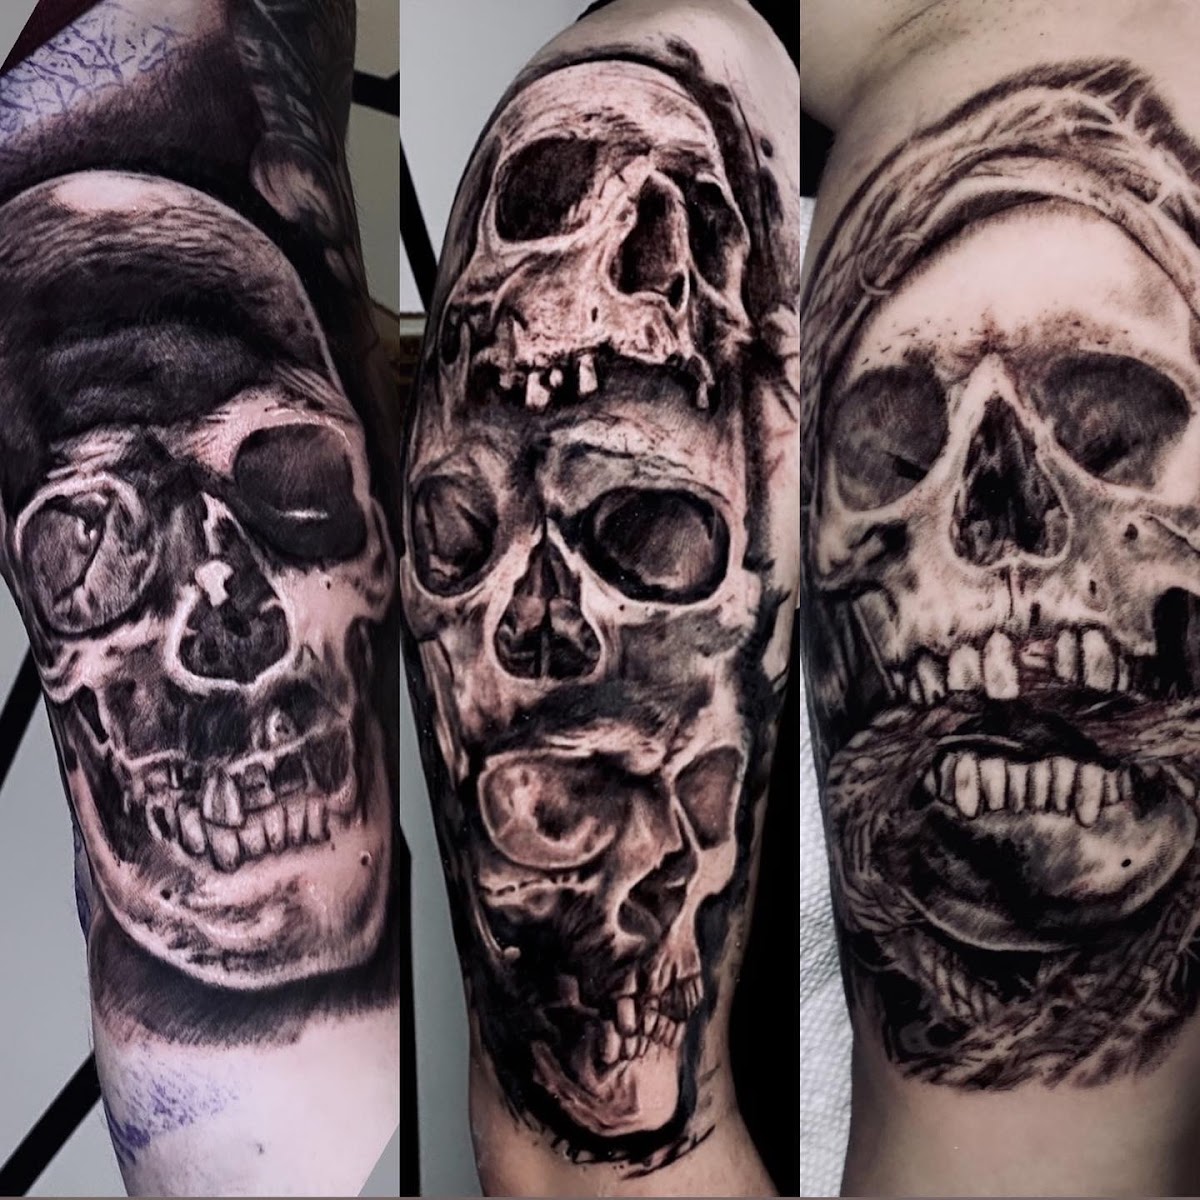 19 Bone Tattoos On Hands